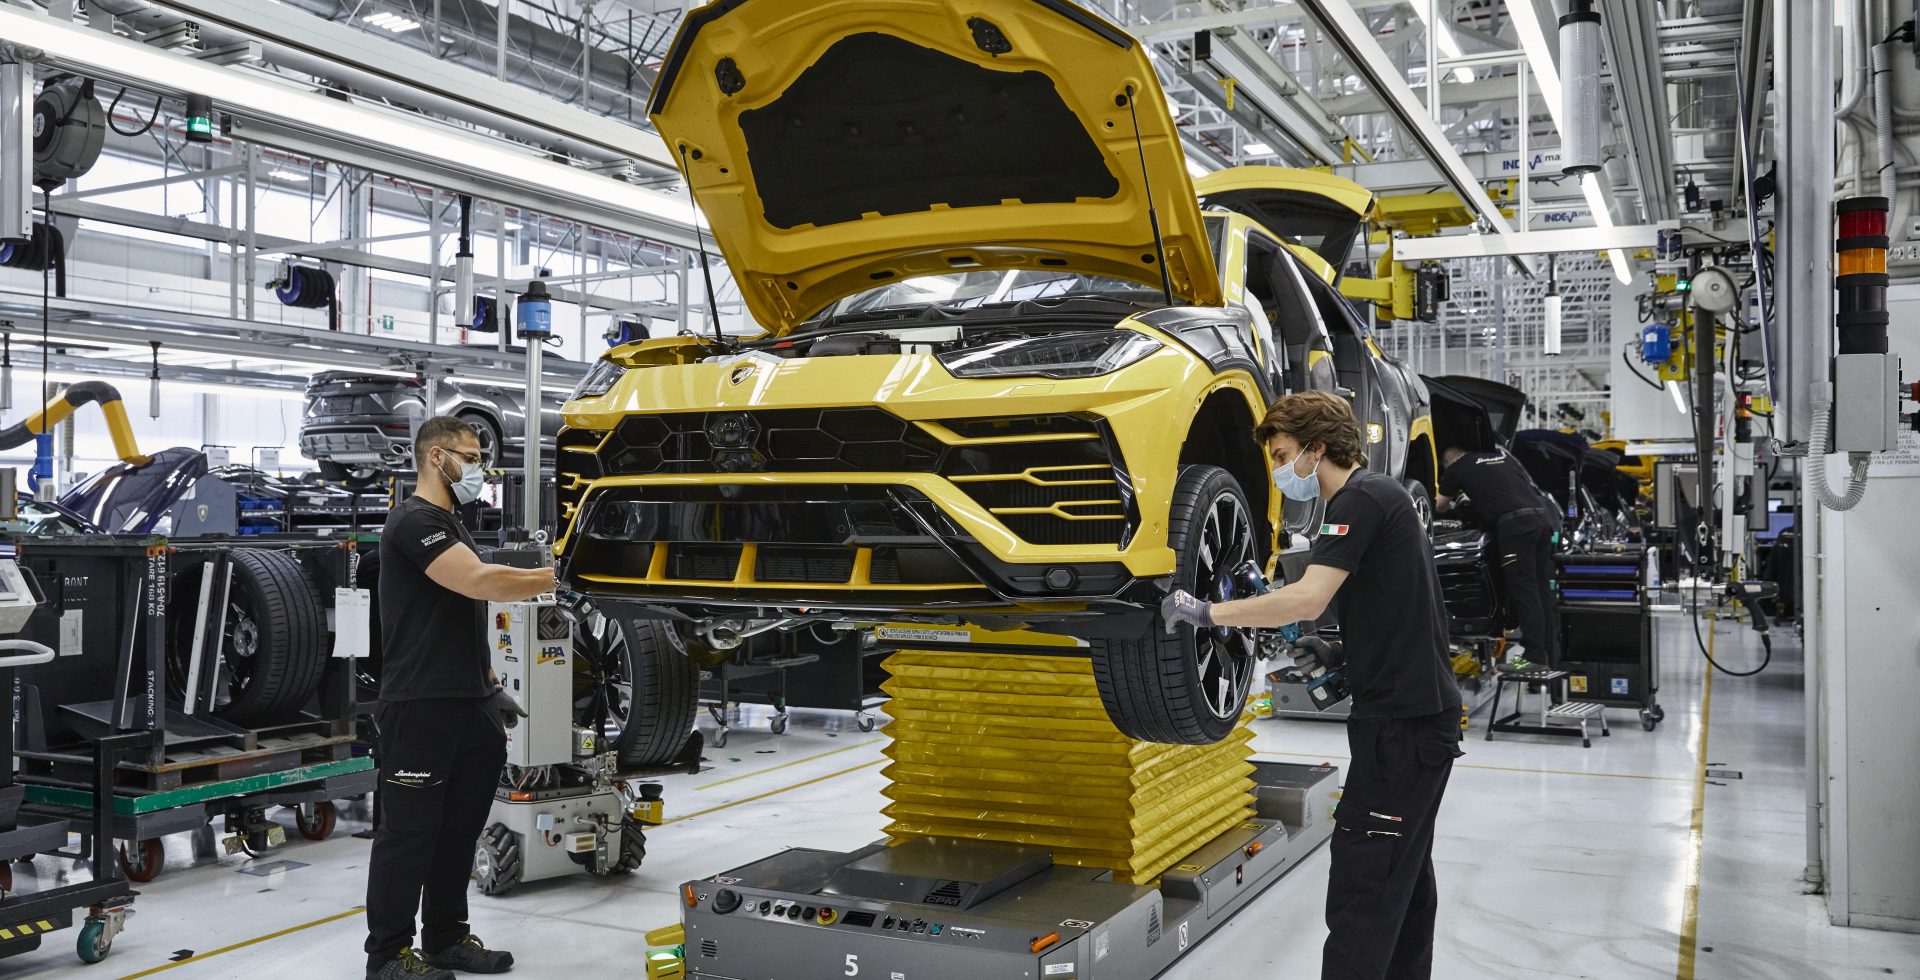 Automobili Lamborghini earns “top employer Italy 2021” certification